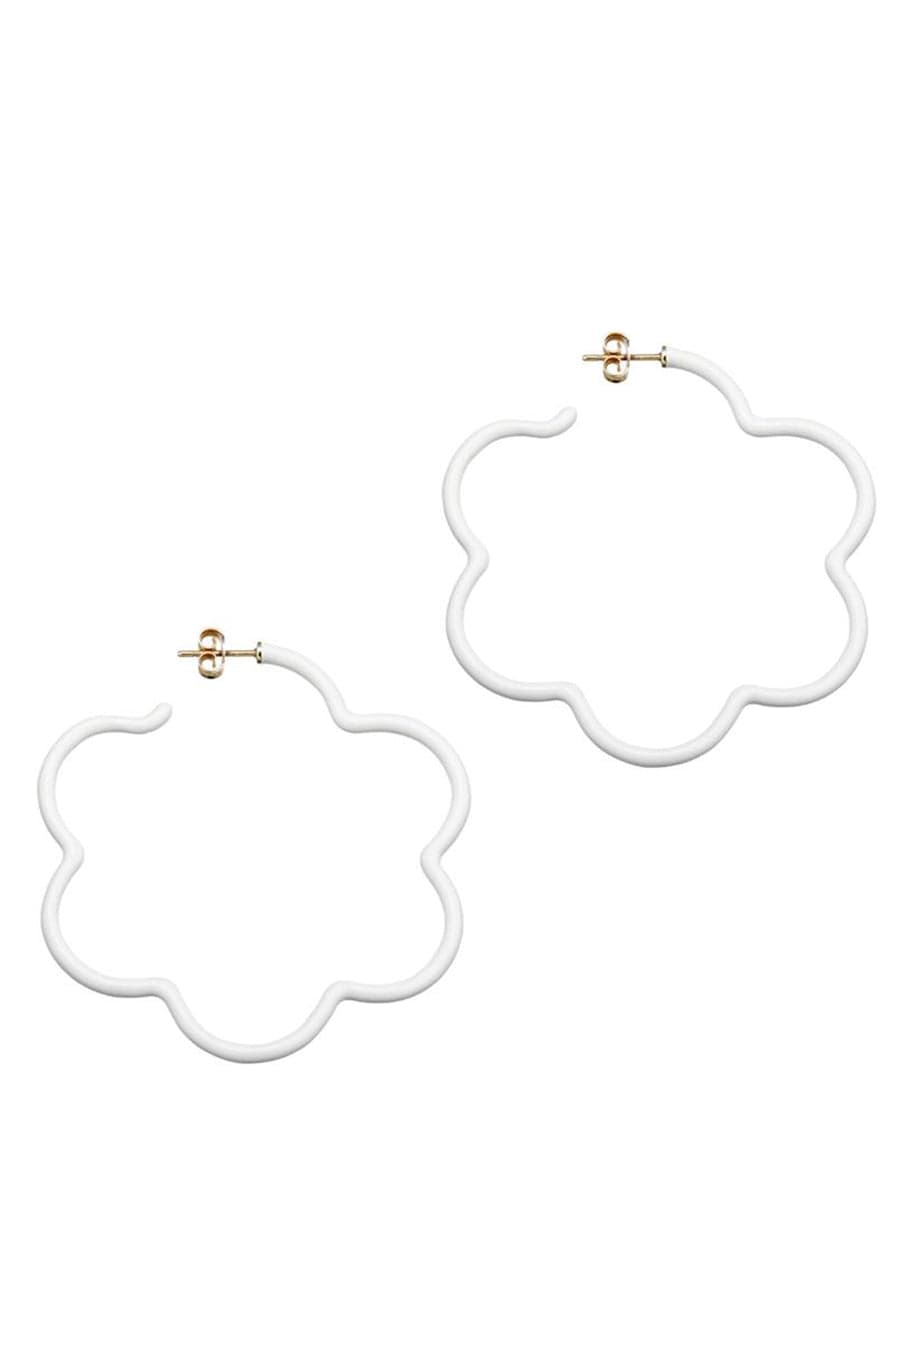 BEA BONGIASCA-White 2 Tone Large Flower Earrings-YELLOW GOLD